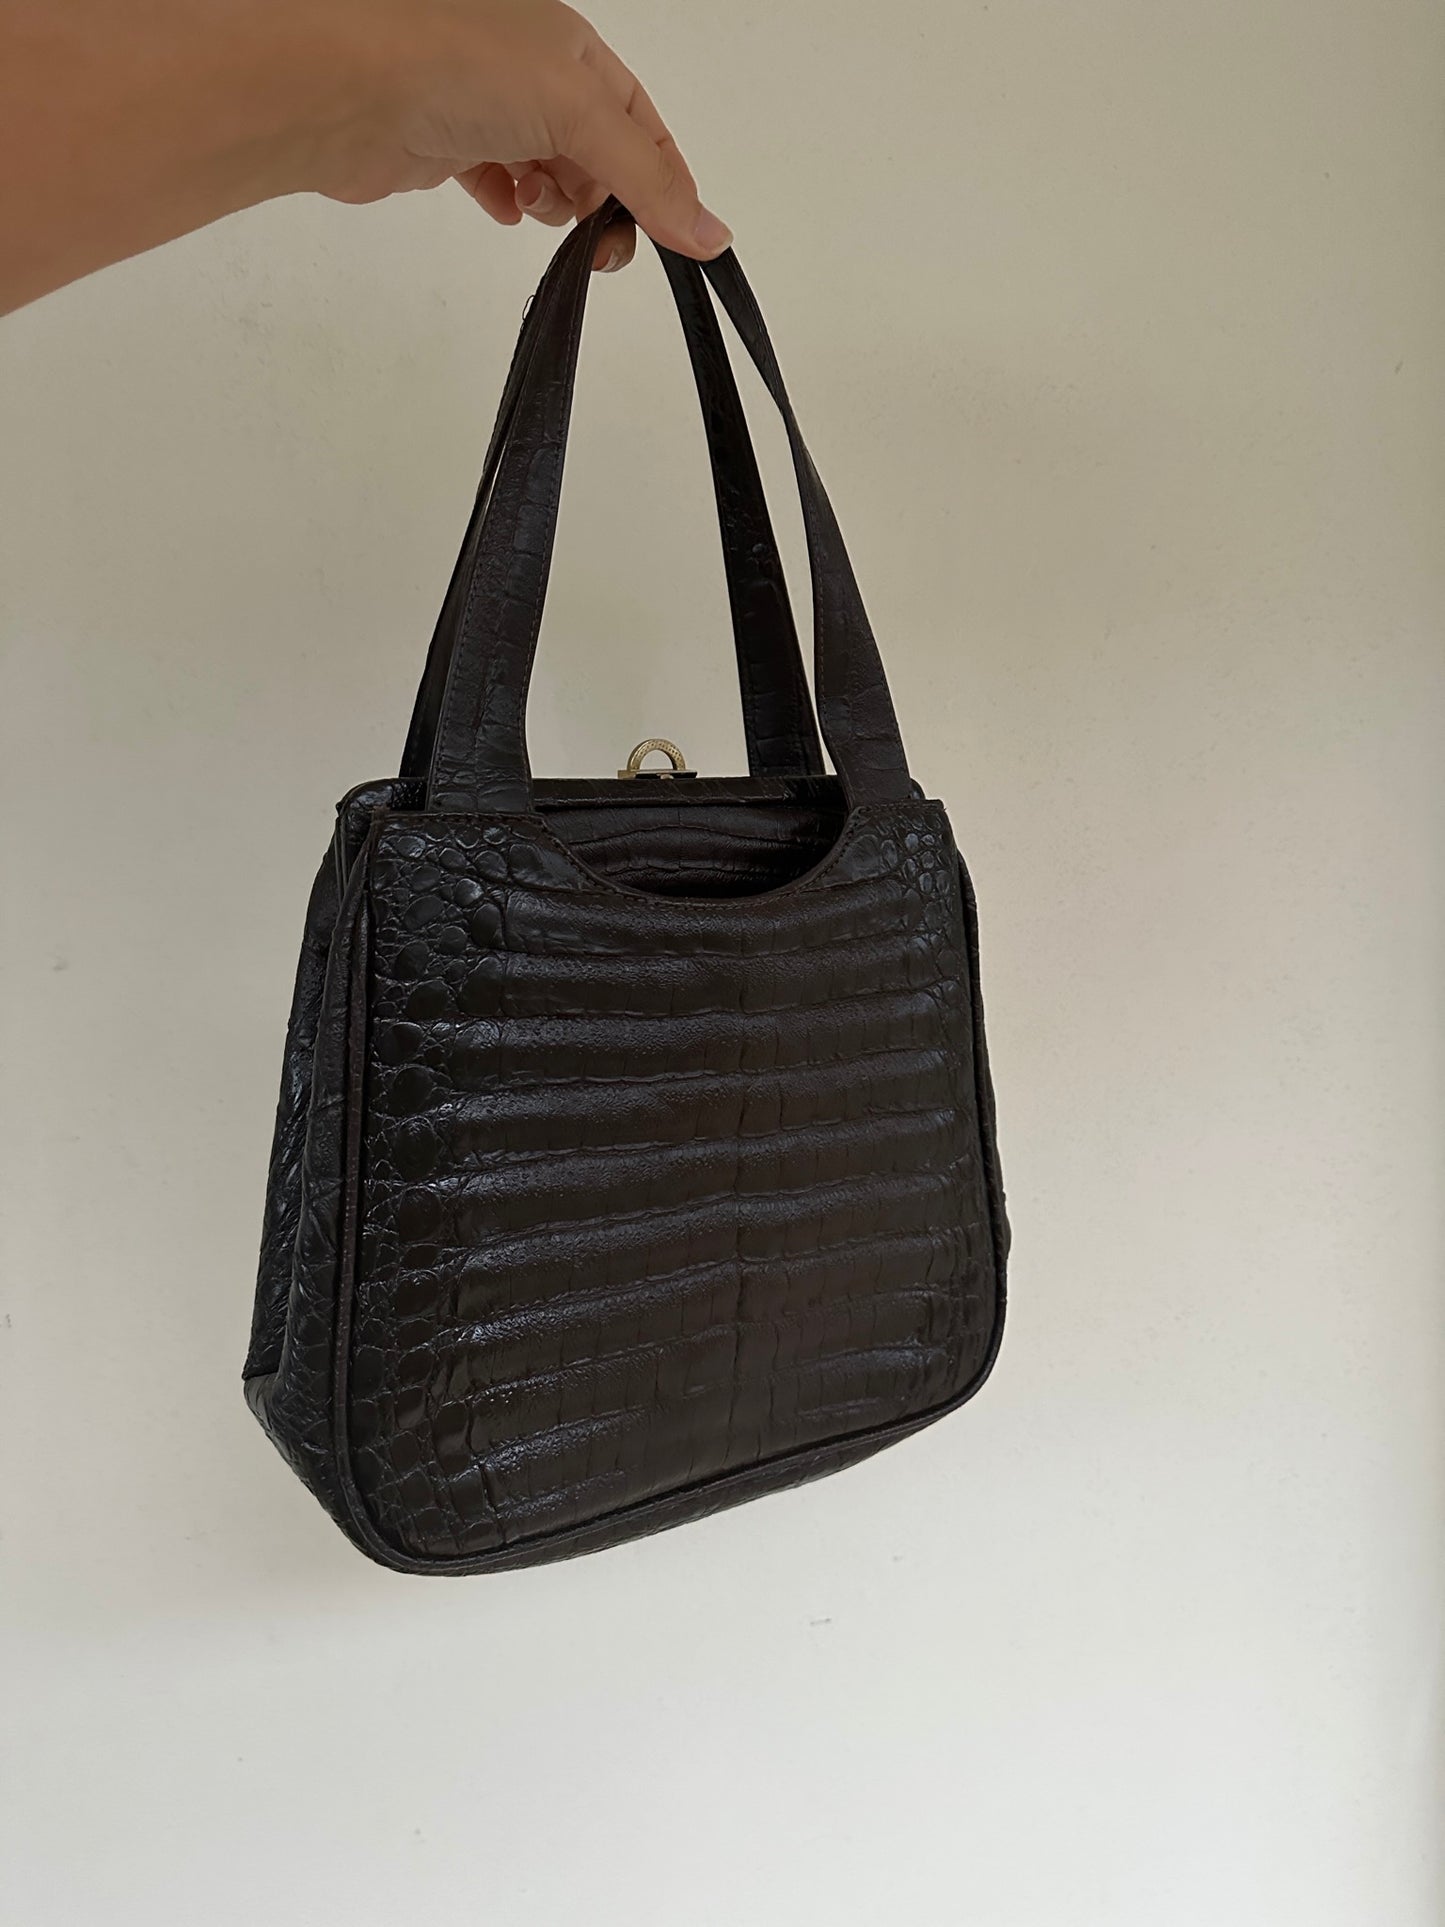 Brown cocodrile print leather bag